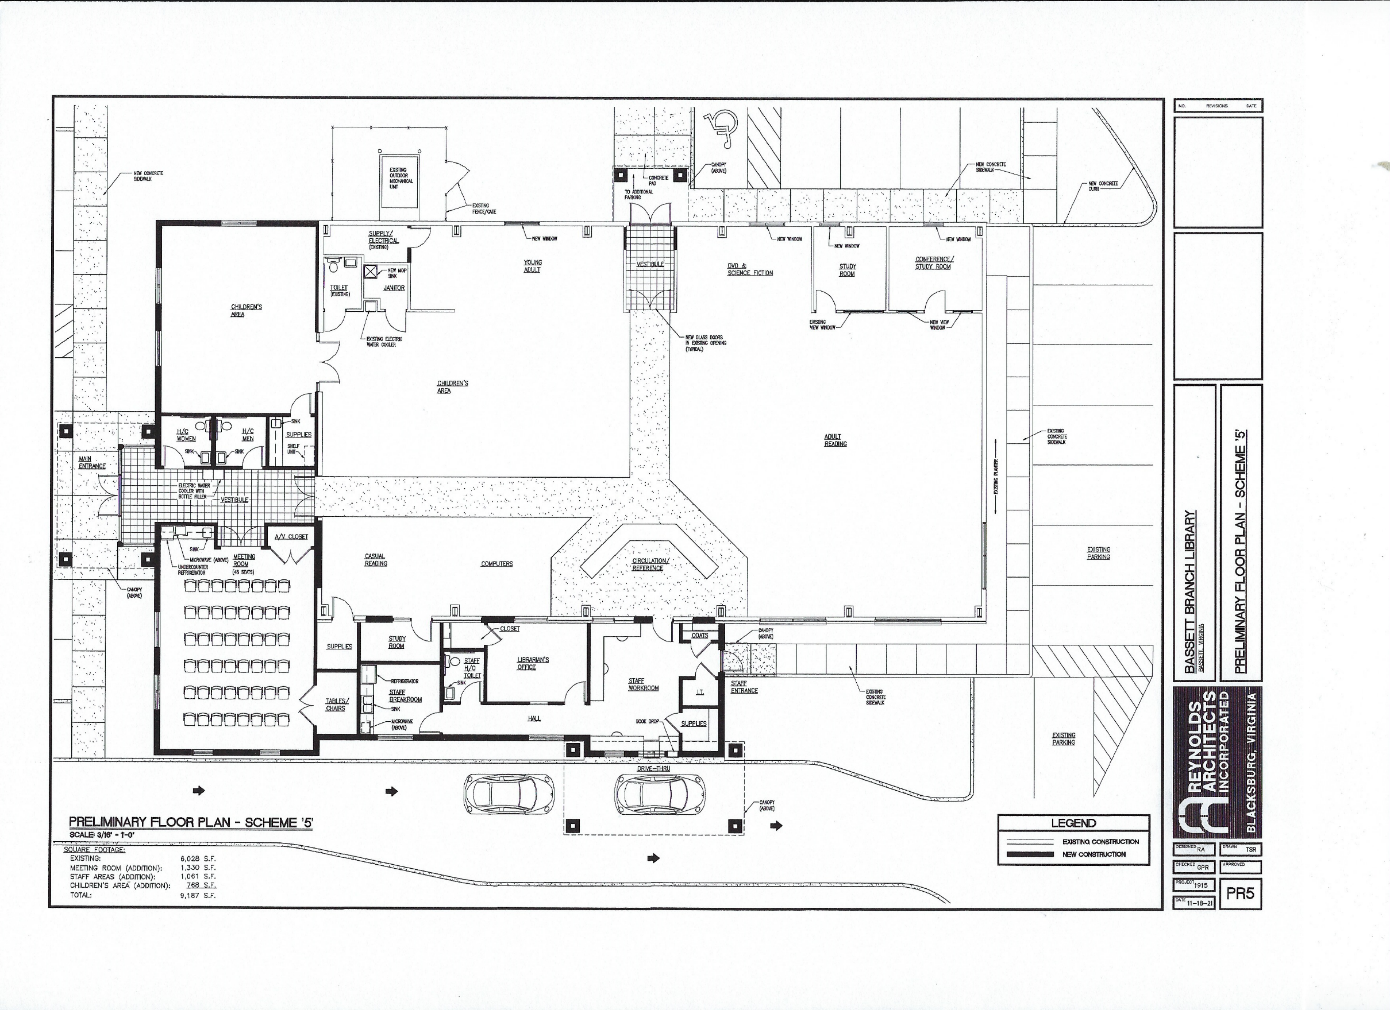 Bassett Library Floor Plan